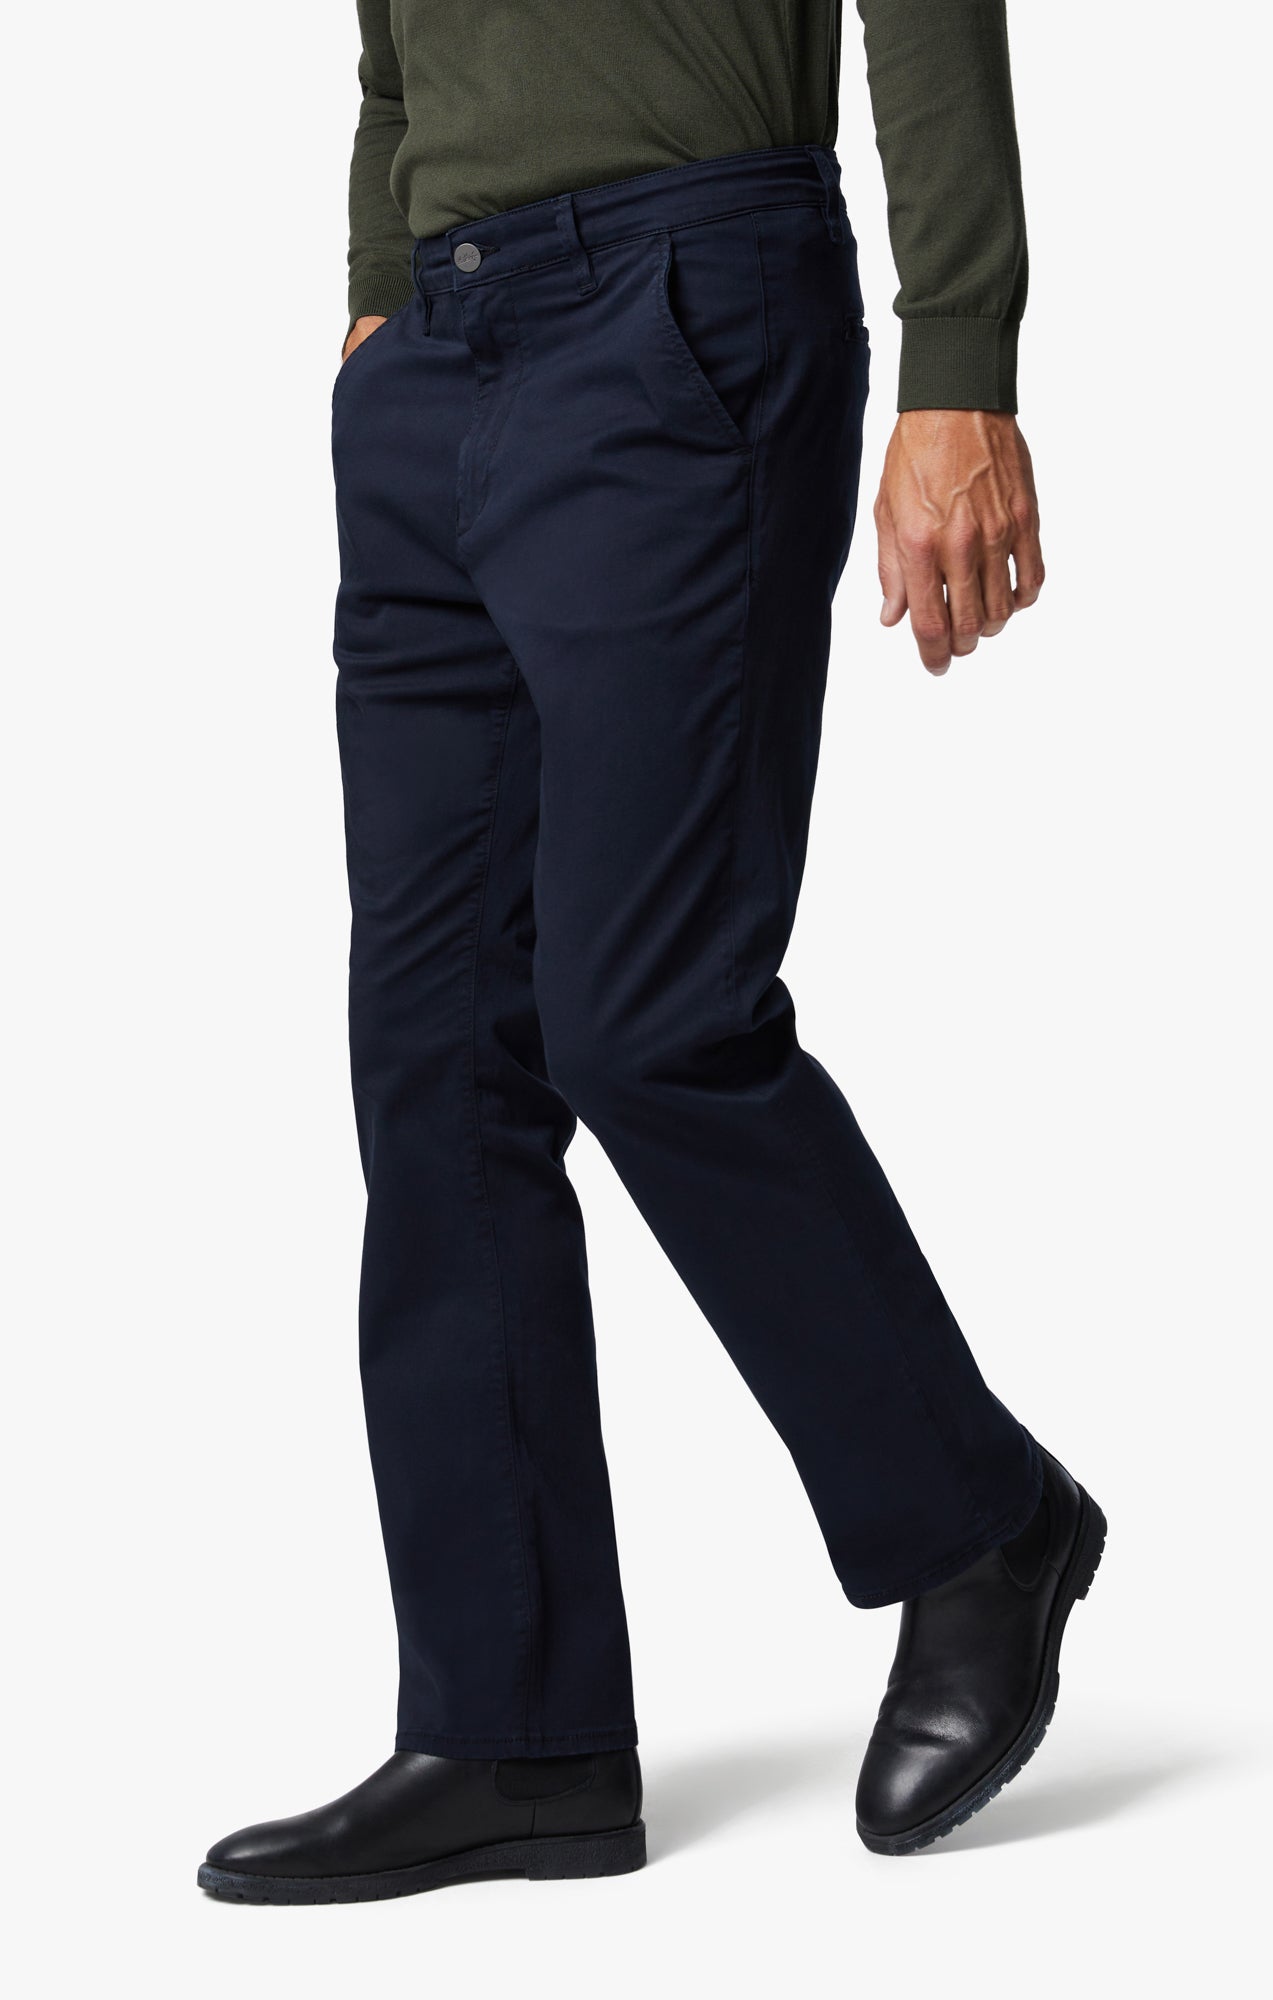 Brilliant Basics Men's Chino Pant - Navy - Size 36